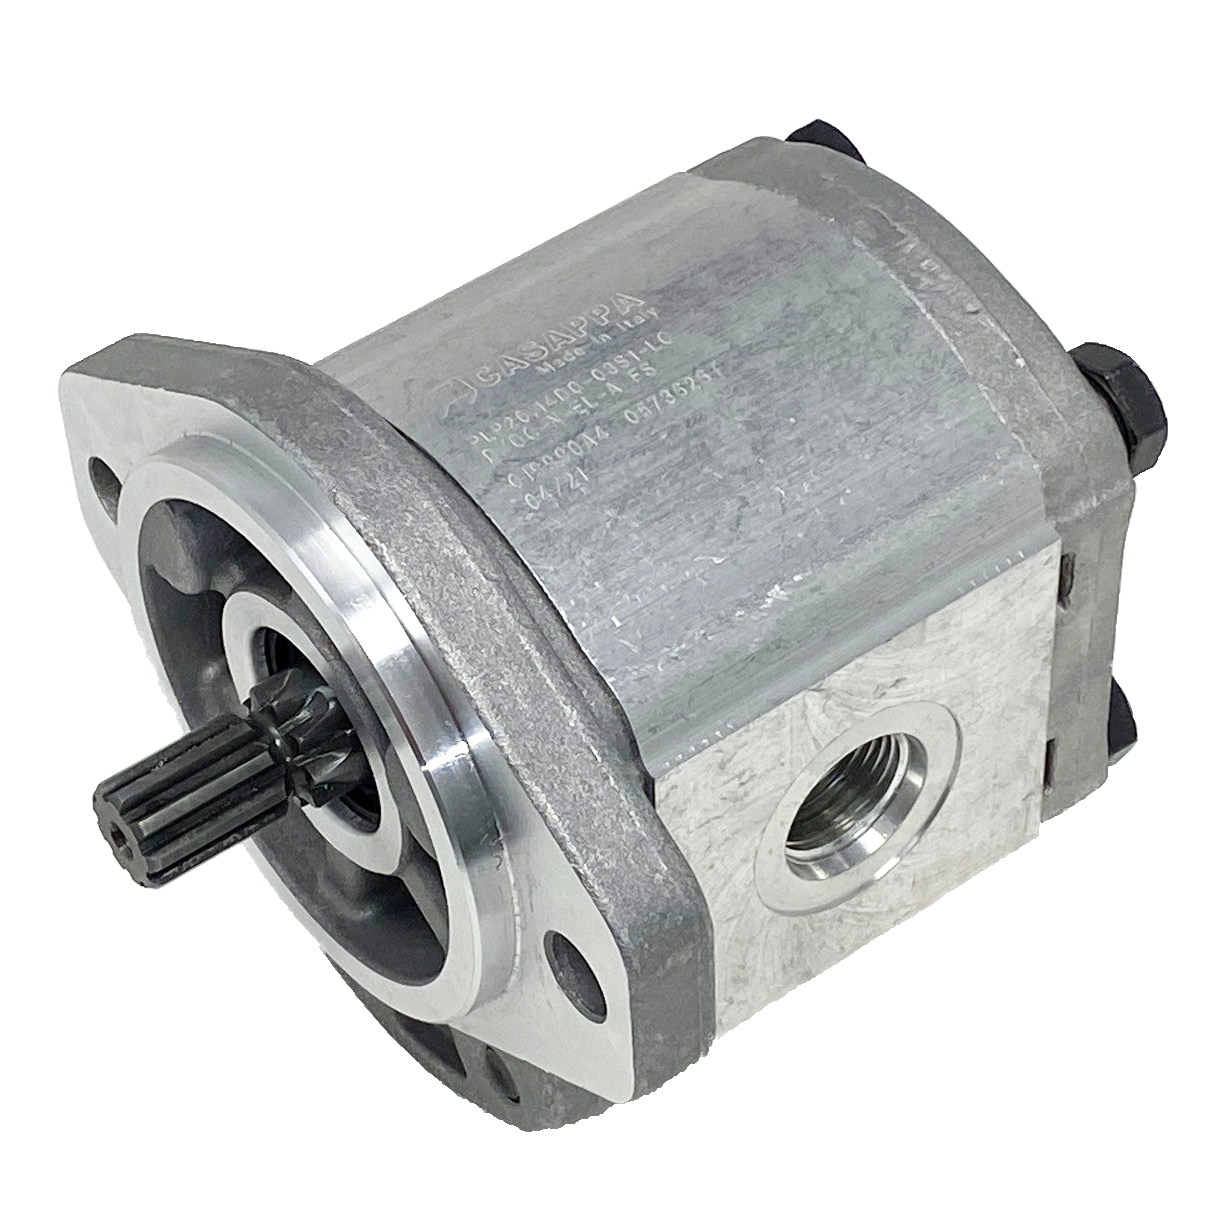 PLM20.20B0-07S1-LOC/OD-N-EL : Casappa Polaris Gear Motor, 21.14cc, 2900psi Rated, 3000RPM, Reversible Interior Drain, 11T 16/32dp Shaft, SAE A 2-Bolt Flange, 0.625 (5/8") #10 SAE Inlet, 0.75 (3/4") #12 SAE Outlet, Aluminum Body & Flange